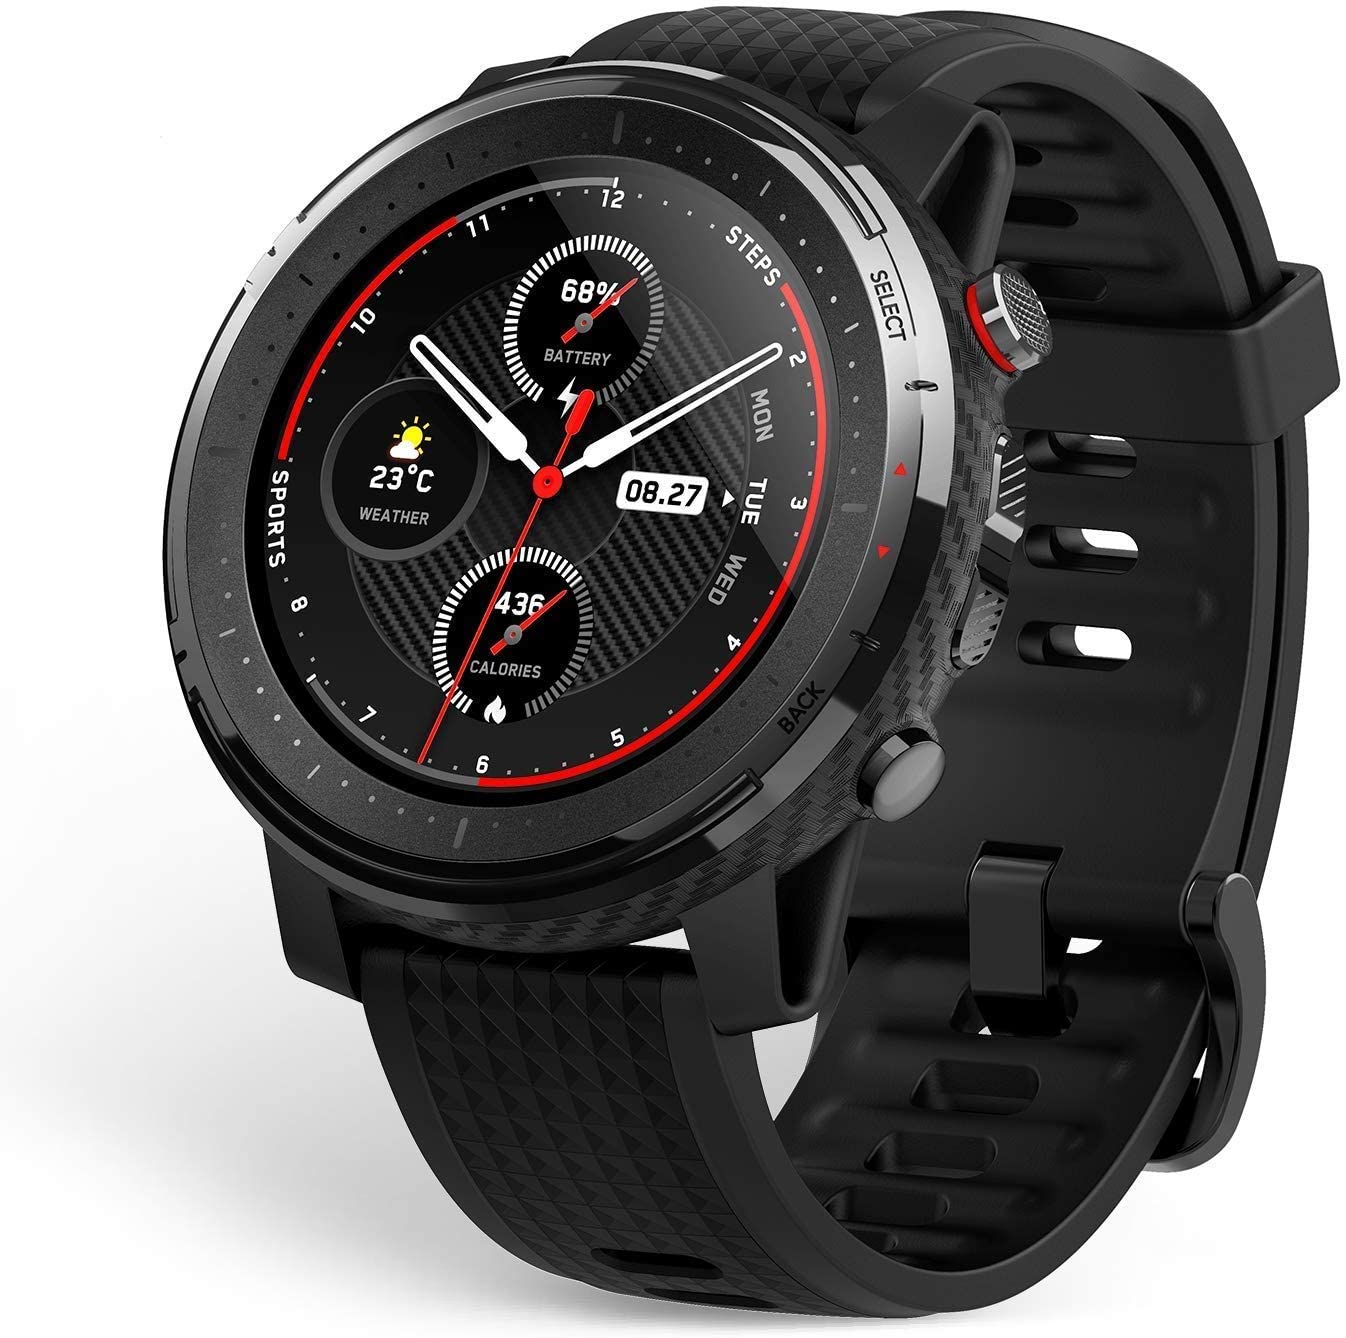 Amazfit Stratos 3 Reloj Smartwatch - Pantalla Tactil 1.34\" - WiFi, Bluetooth 4.2 - Resistencia al Agua 5 ATM - Color Negro